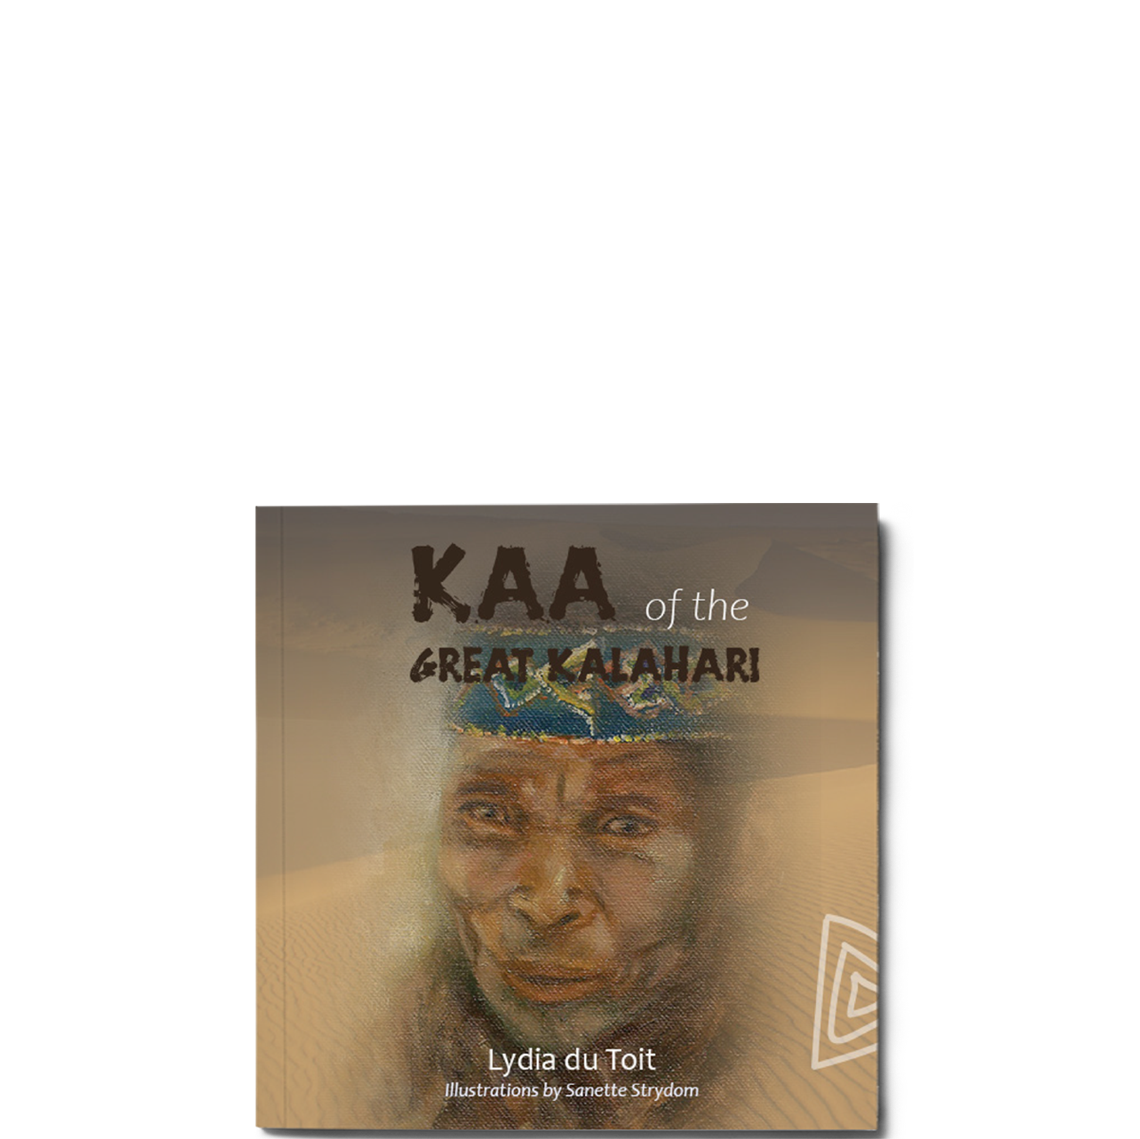 Picture of KAA of the Great Kalahari